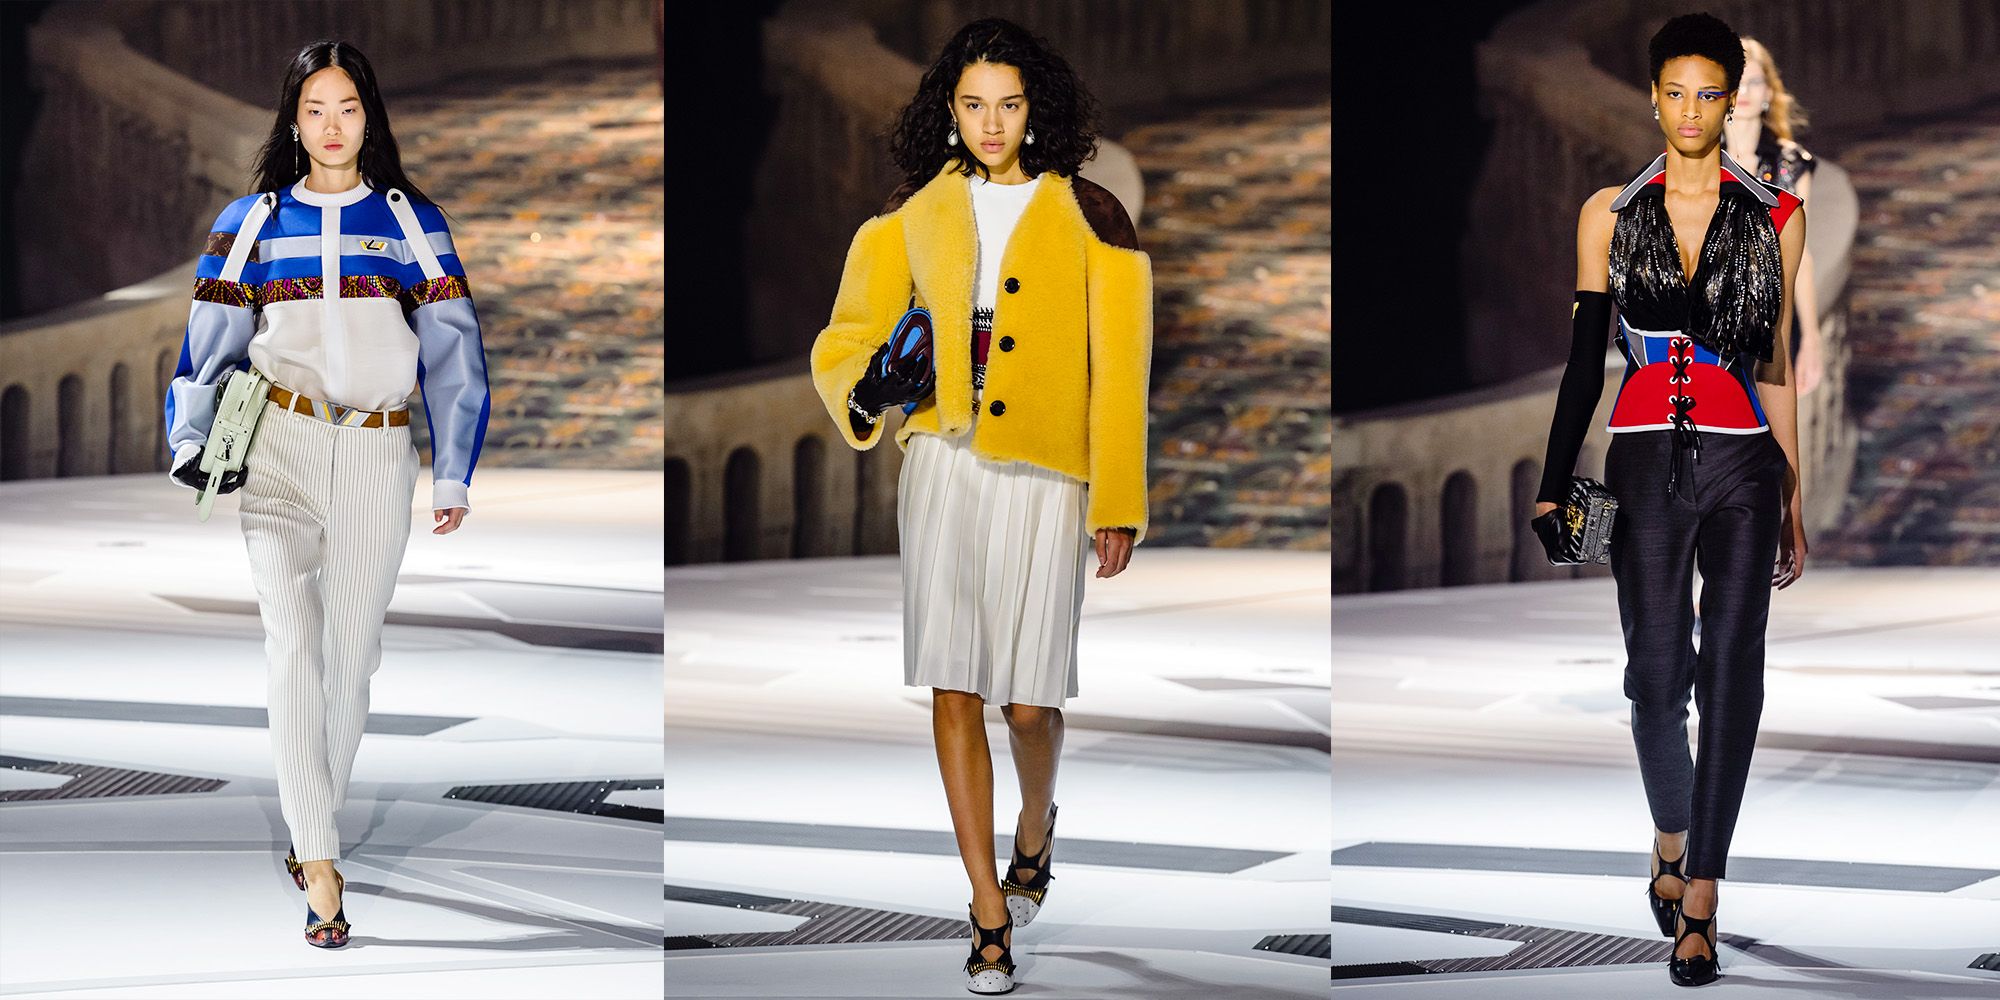 46 Looks From Louis Vuitton Fall PFW Show – Louis Vuitton Runway at Paris Fashion Week